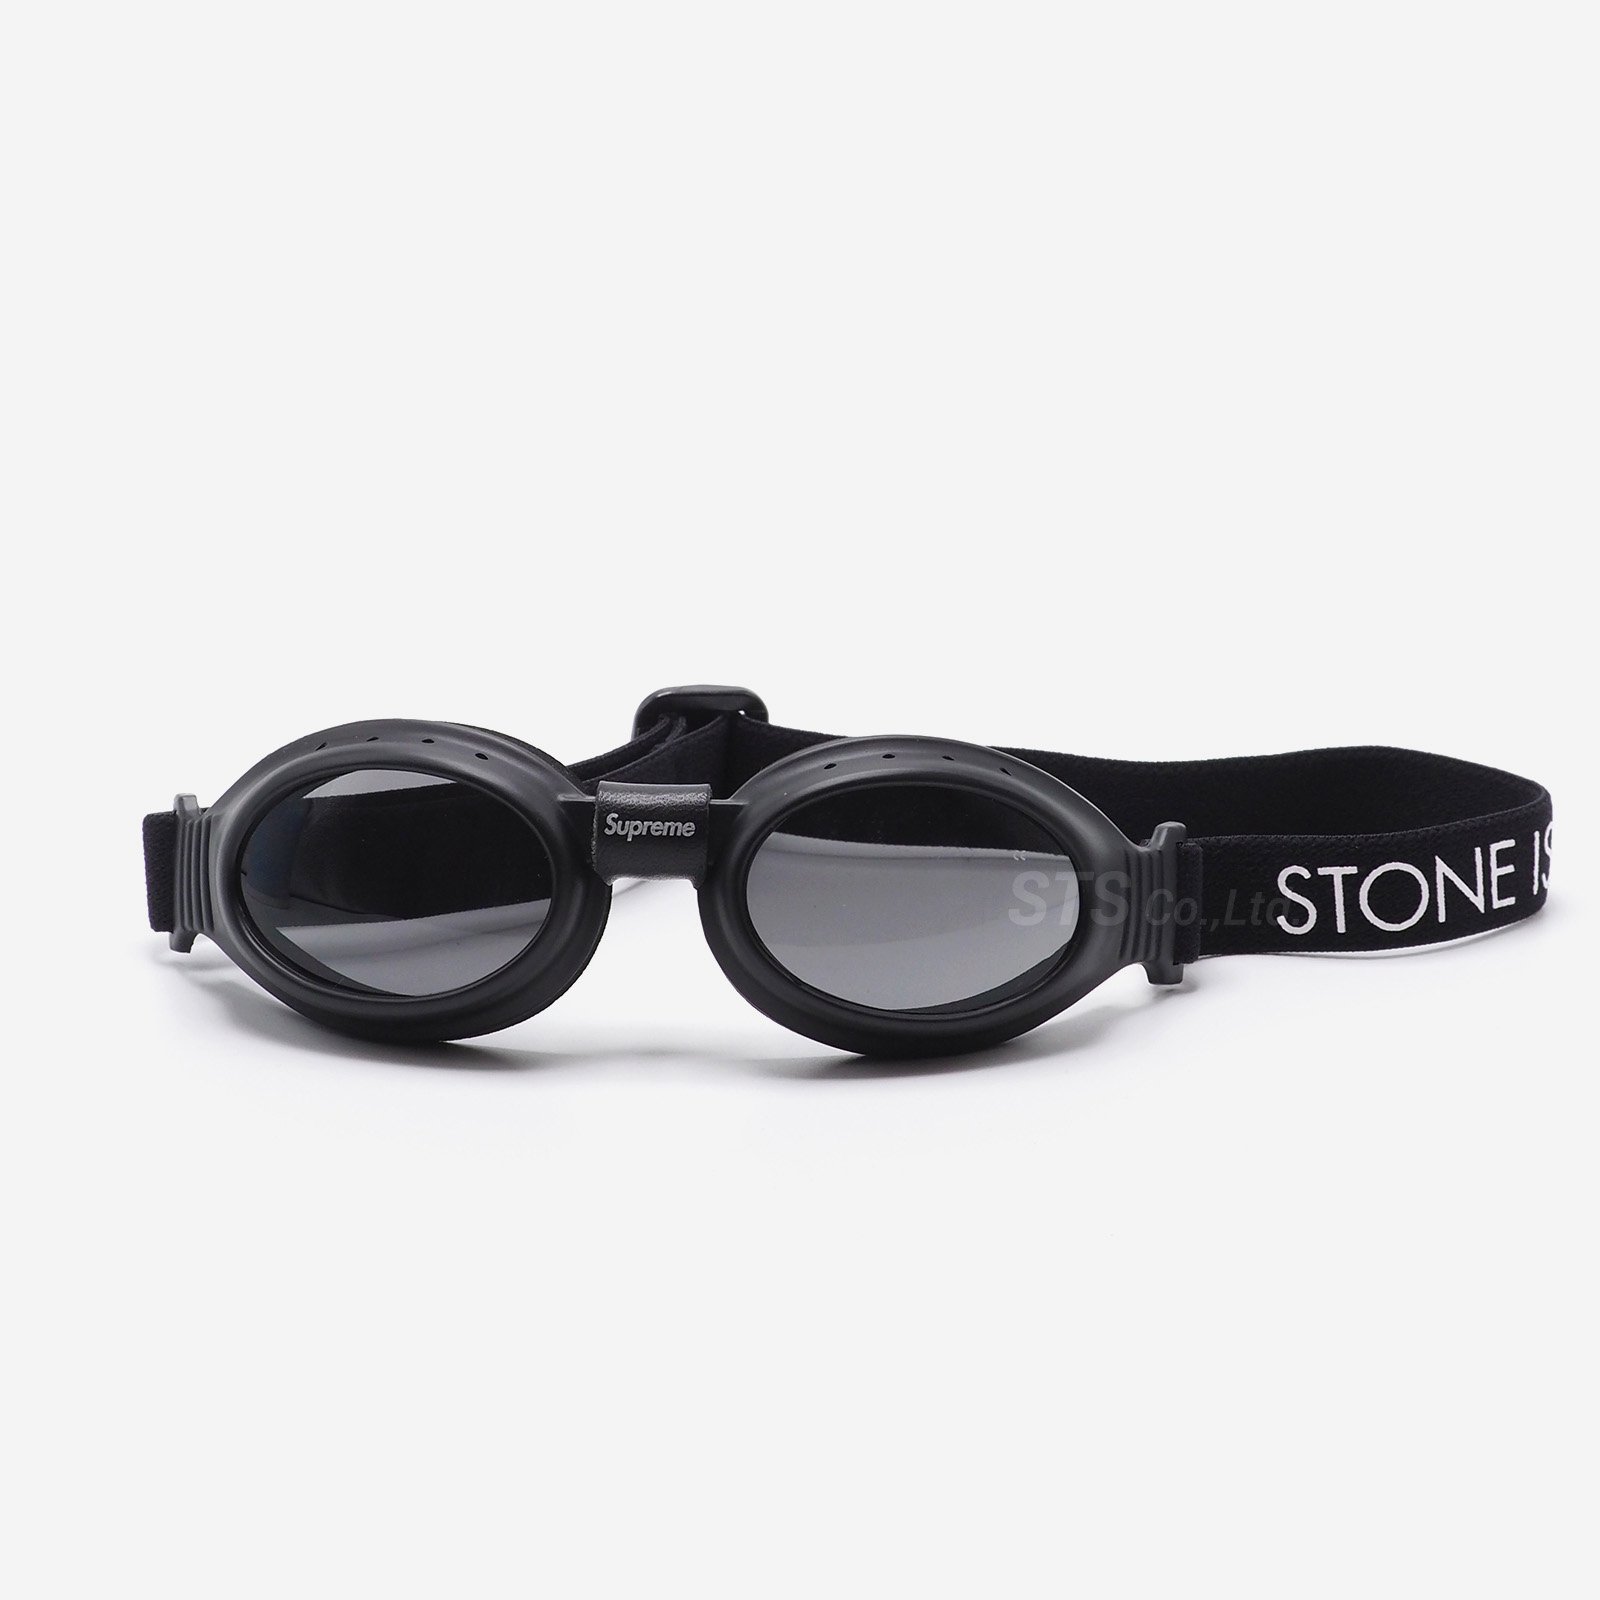 Supreme/Stone Island Baruffaldi Rek Goggles - UG.SHAFT